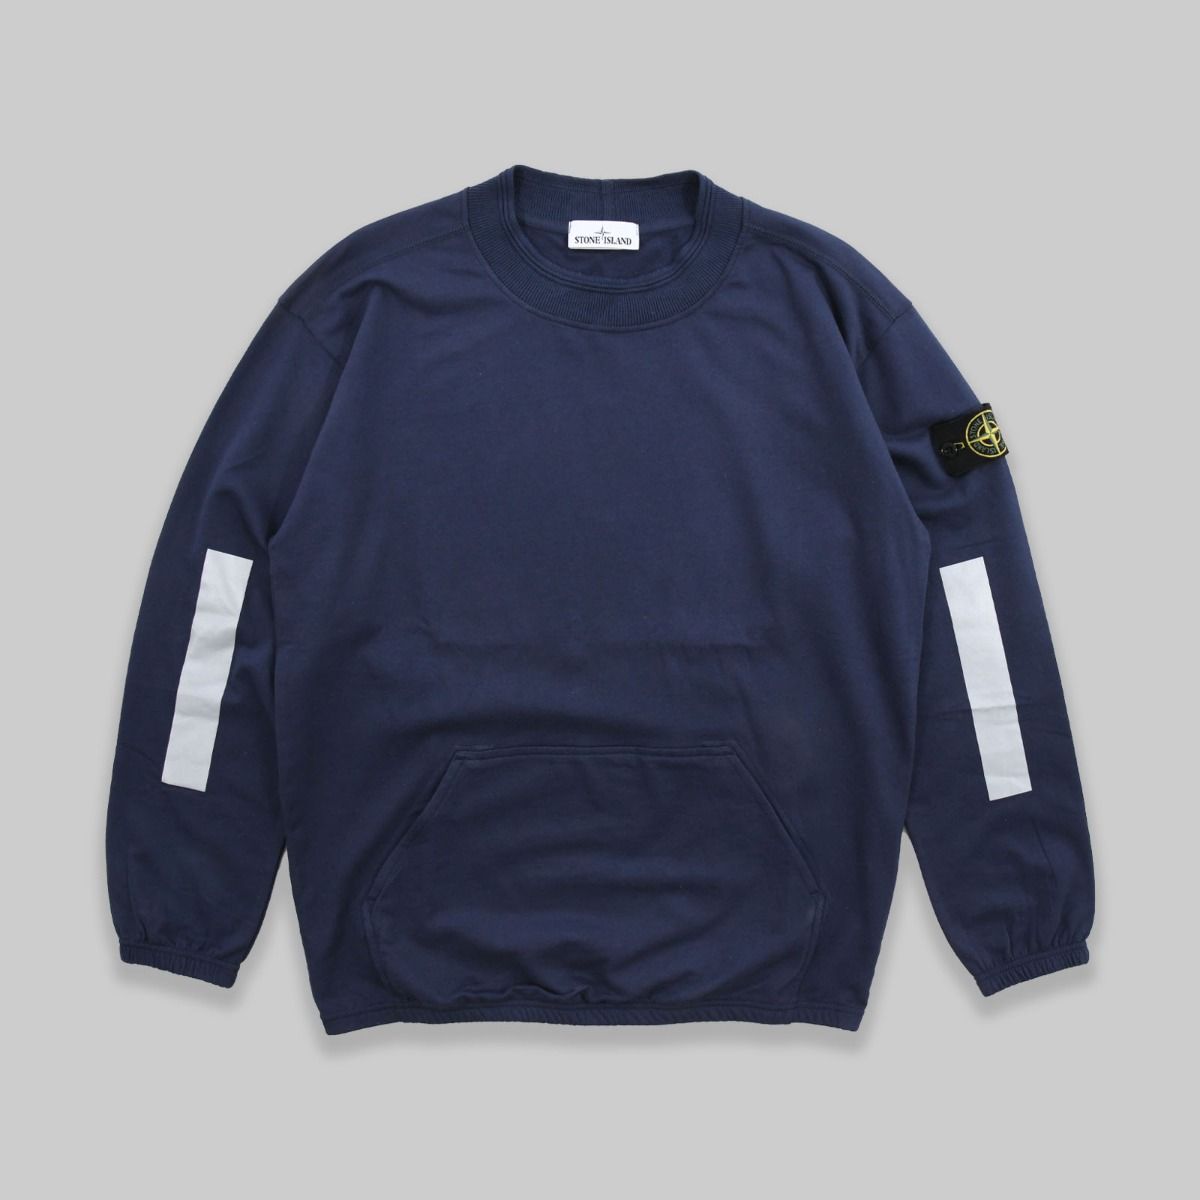 Stone Island A/W 2018 Reflective Sweatshirt